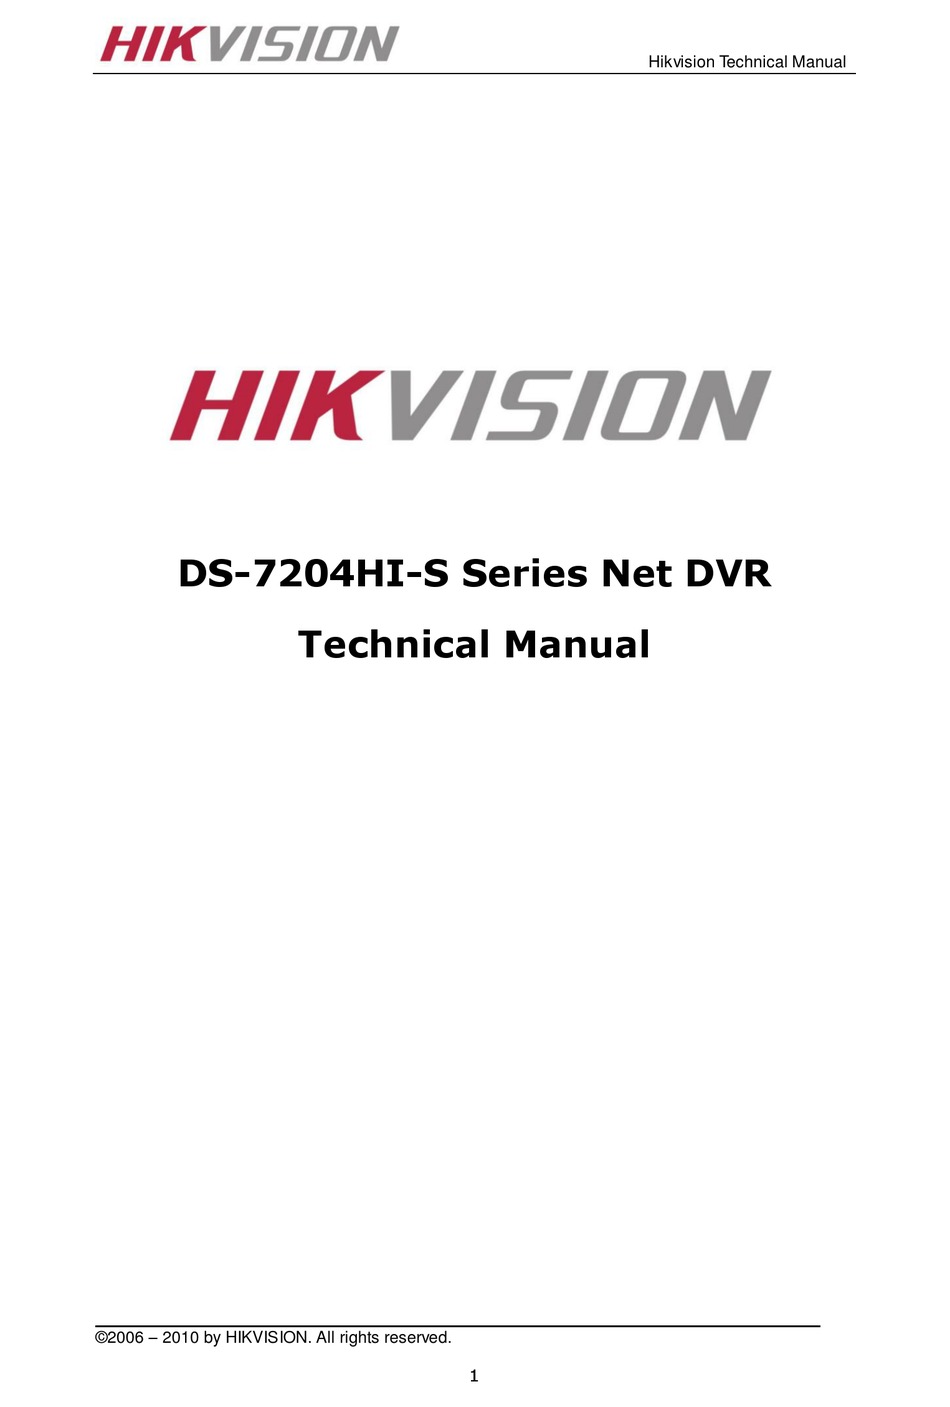 hikvision dvr manual 7200